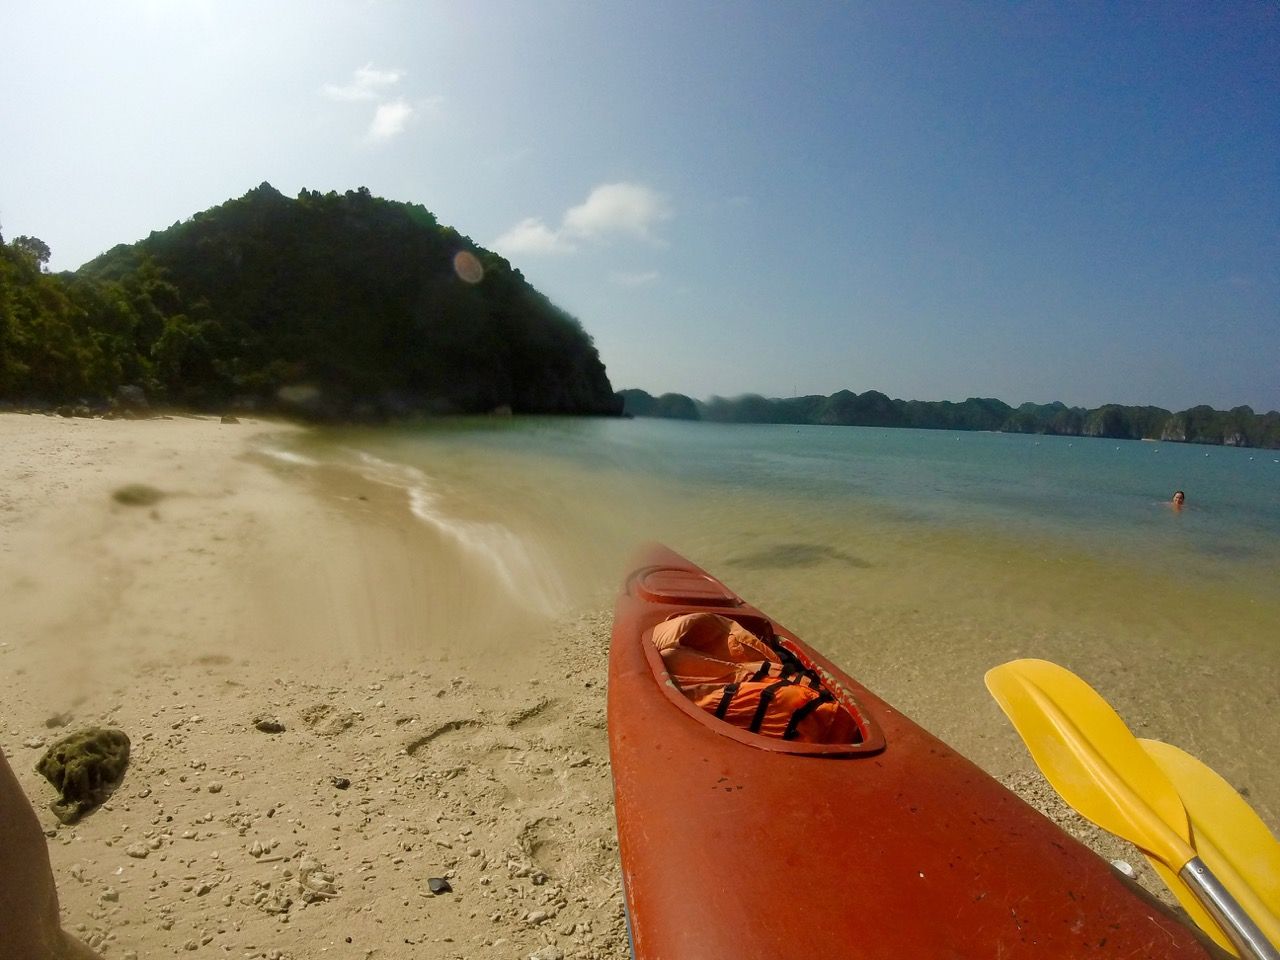 Kayak sitting on a beach.